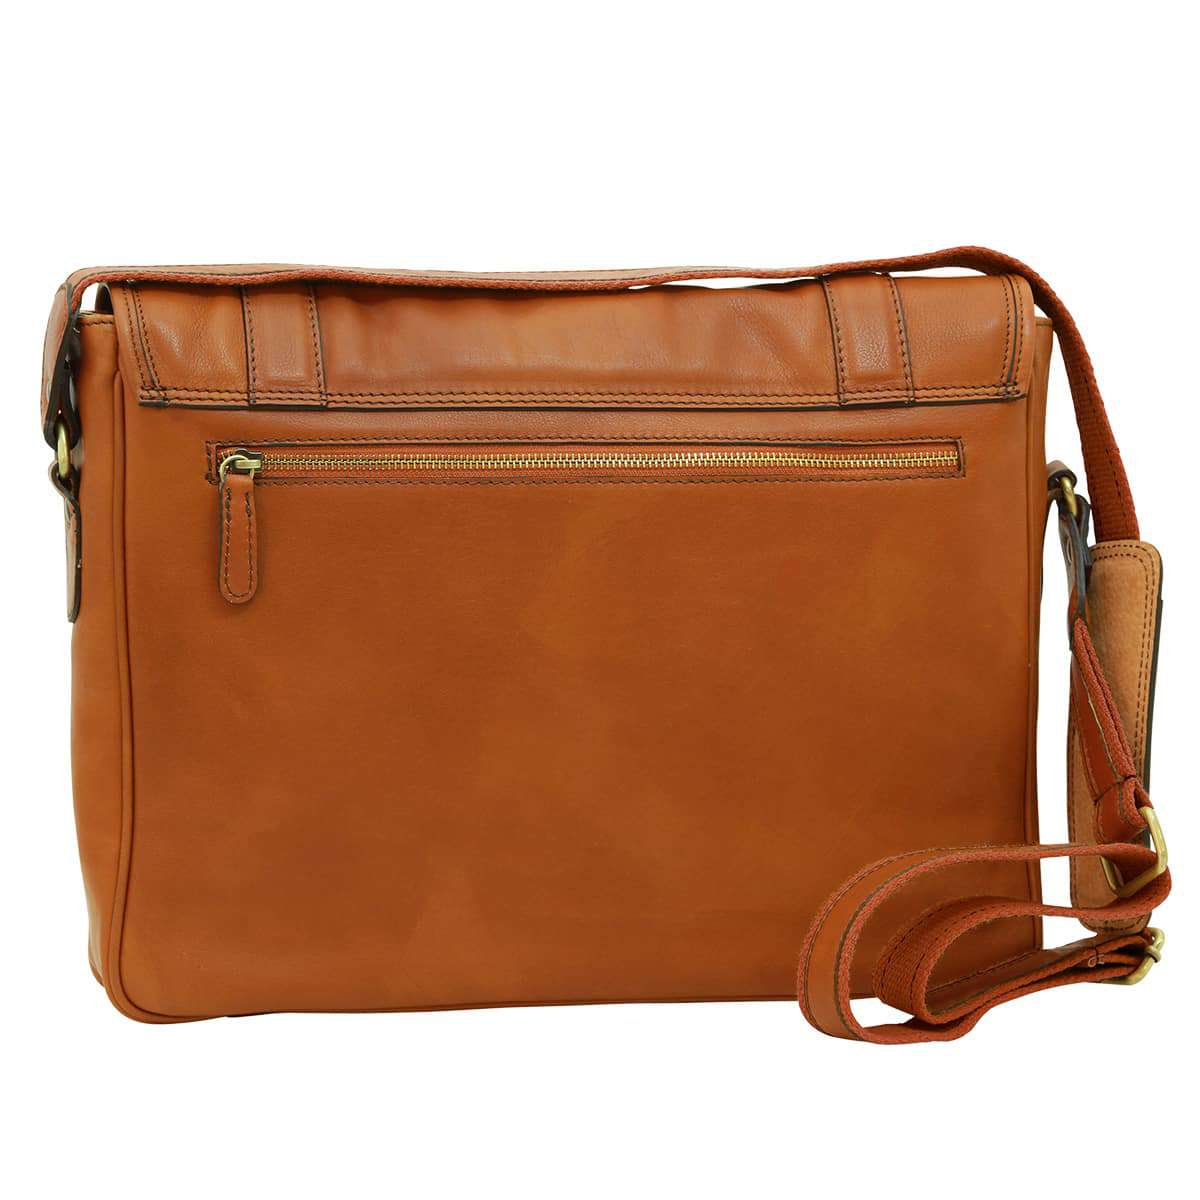 Soft Calfskin Leather Messenger Bag - Gold | 030491CO | EURO | Old Angler Firenze